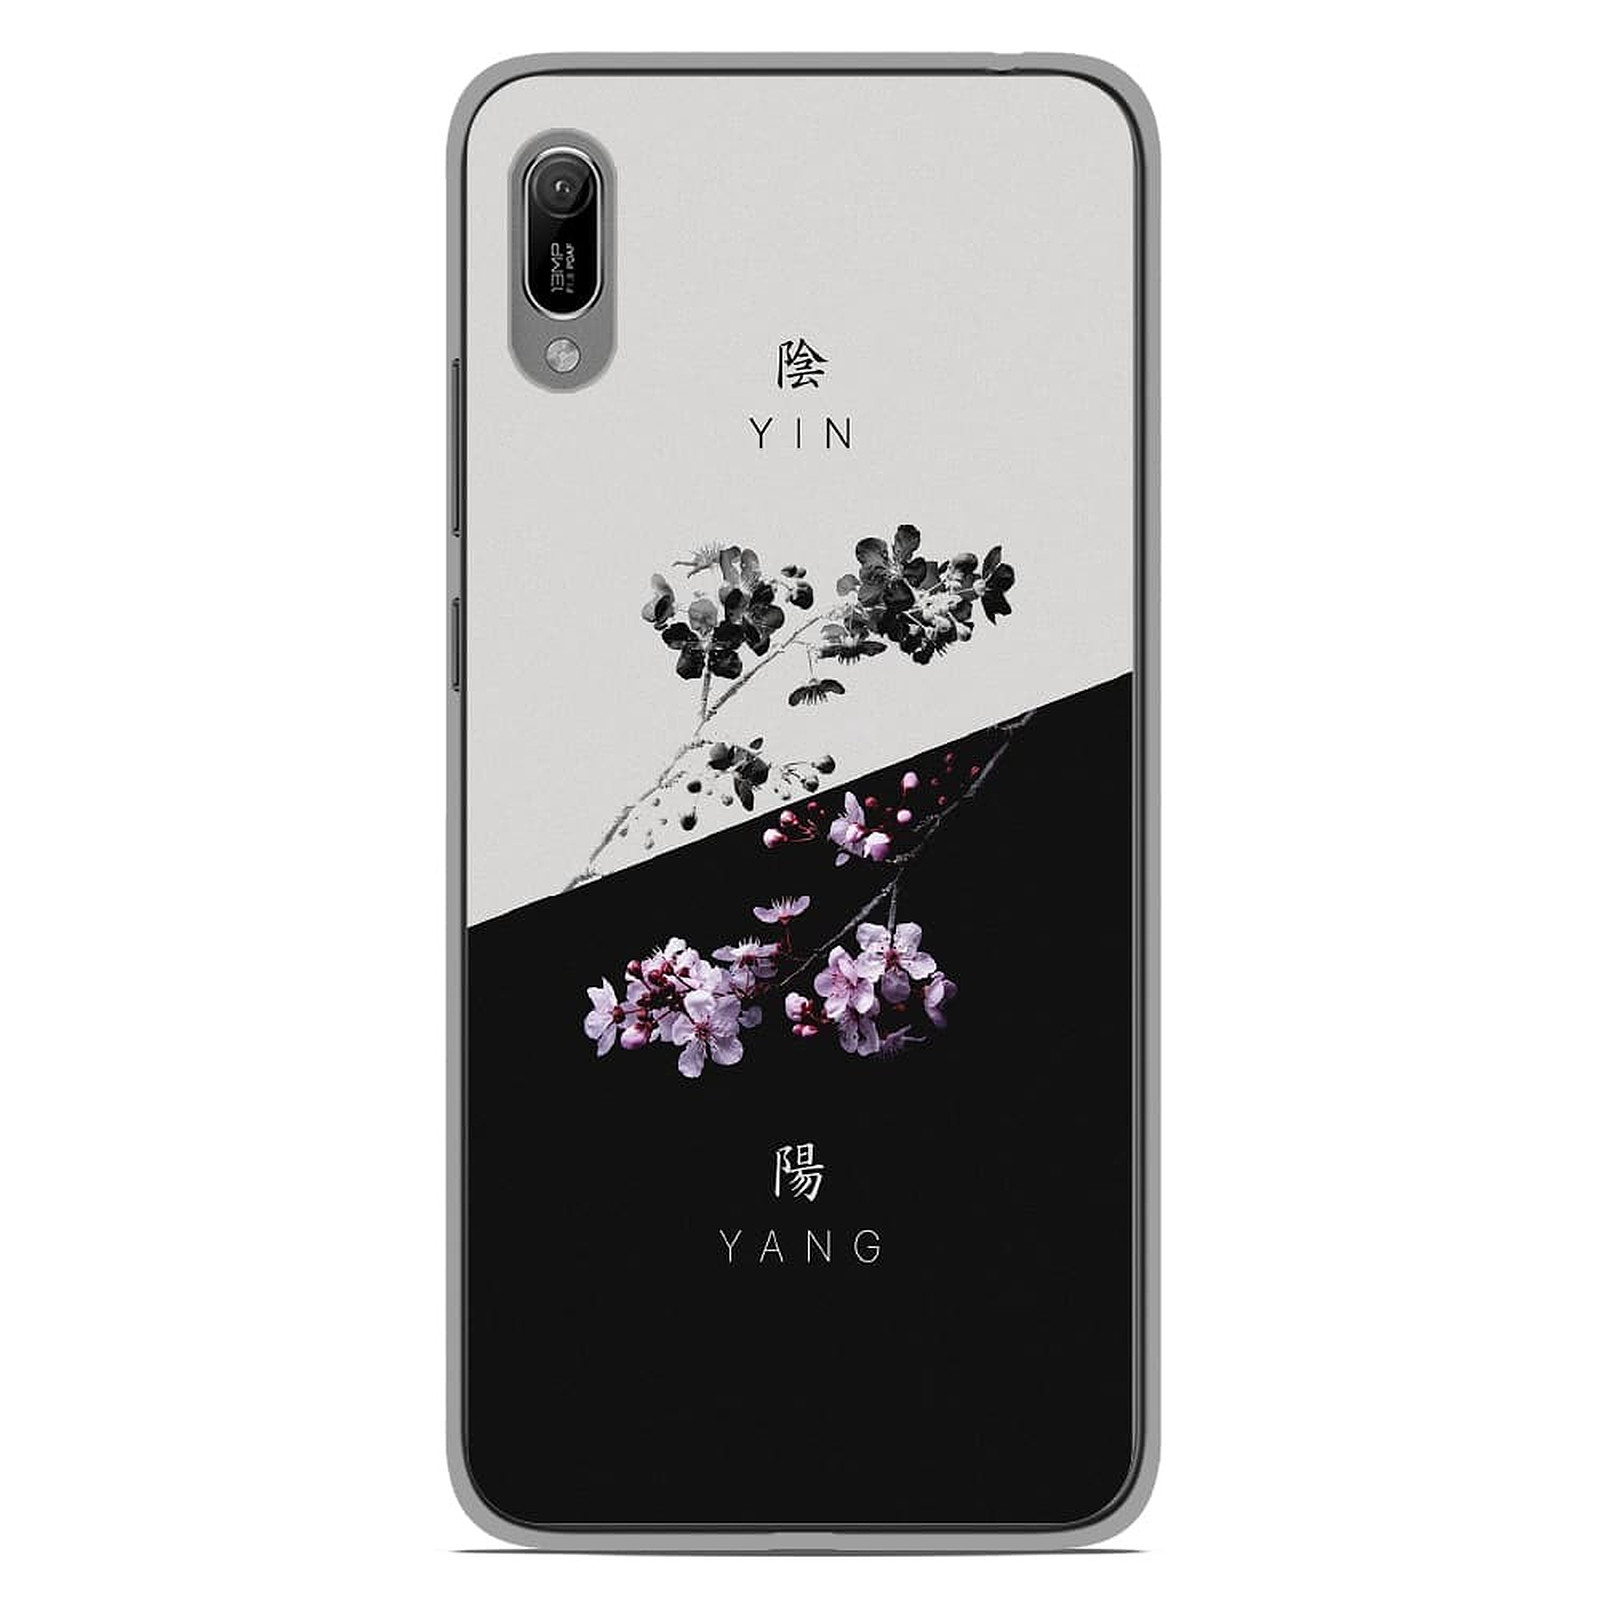 1001 Coques Coque silicone gel Huawei Y6 2019 motif Yin et Yang - Coque telephone 1001Coques